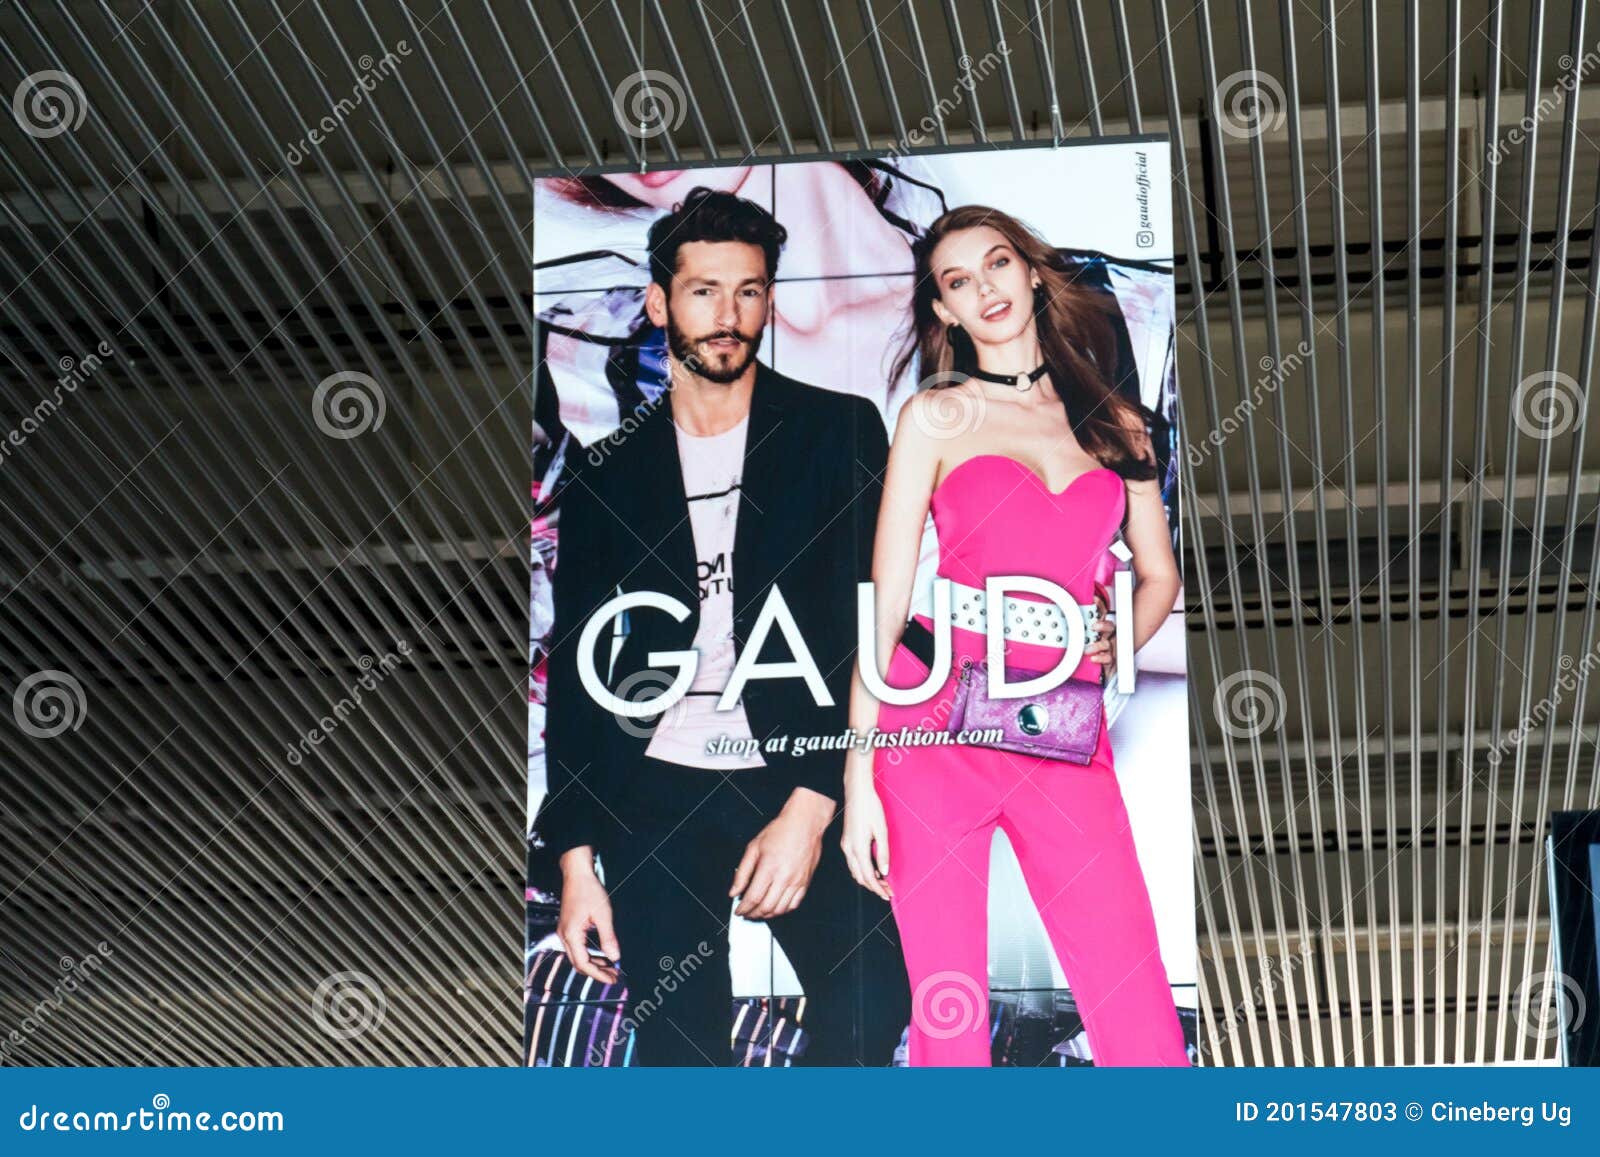 Gaudi fashion brand stock photo. Illustration of influencer - 201547803